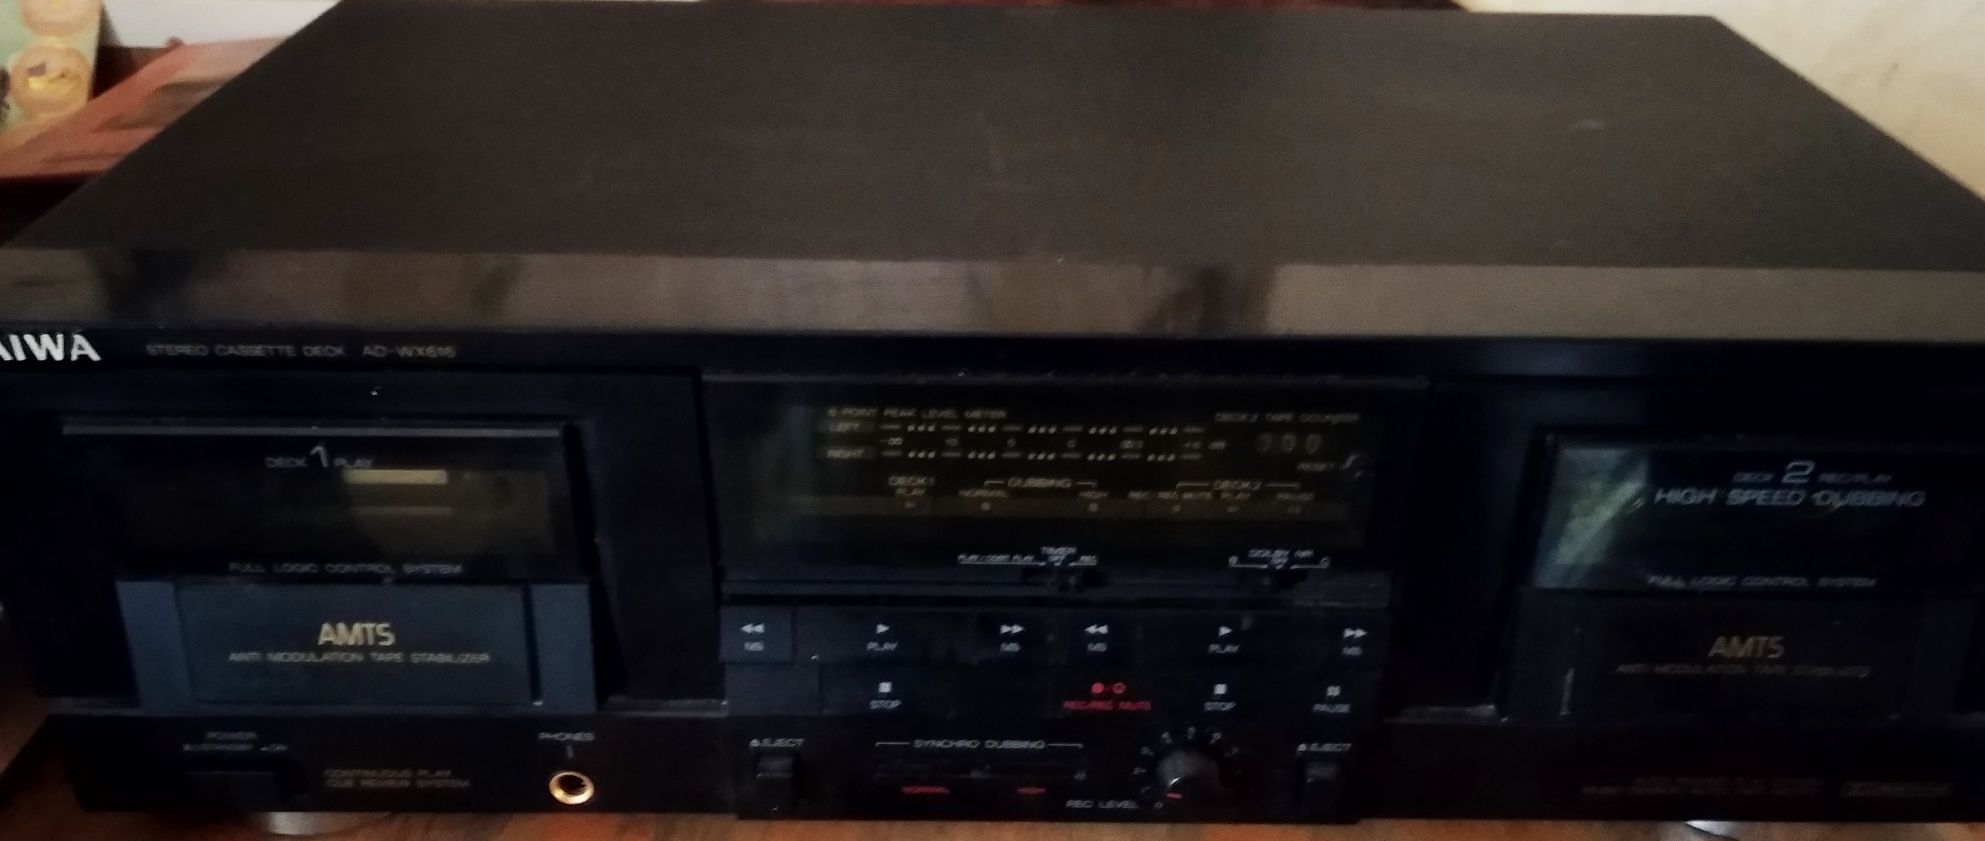 Дека двухкассетная Aiwa AD-WX616 Double Cassette с автореверсом